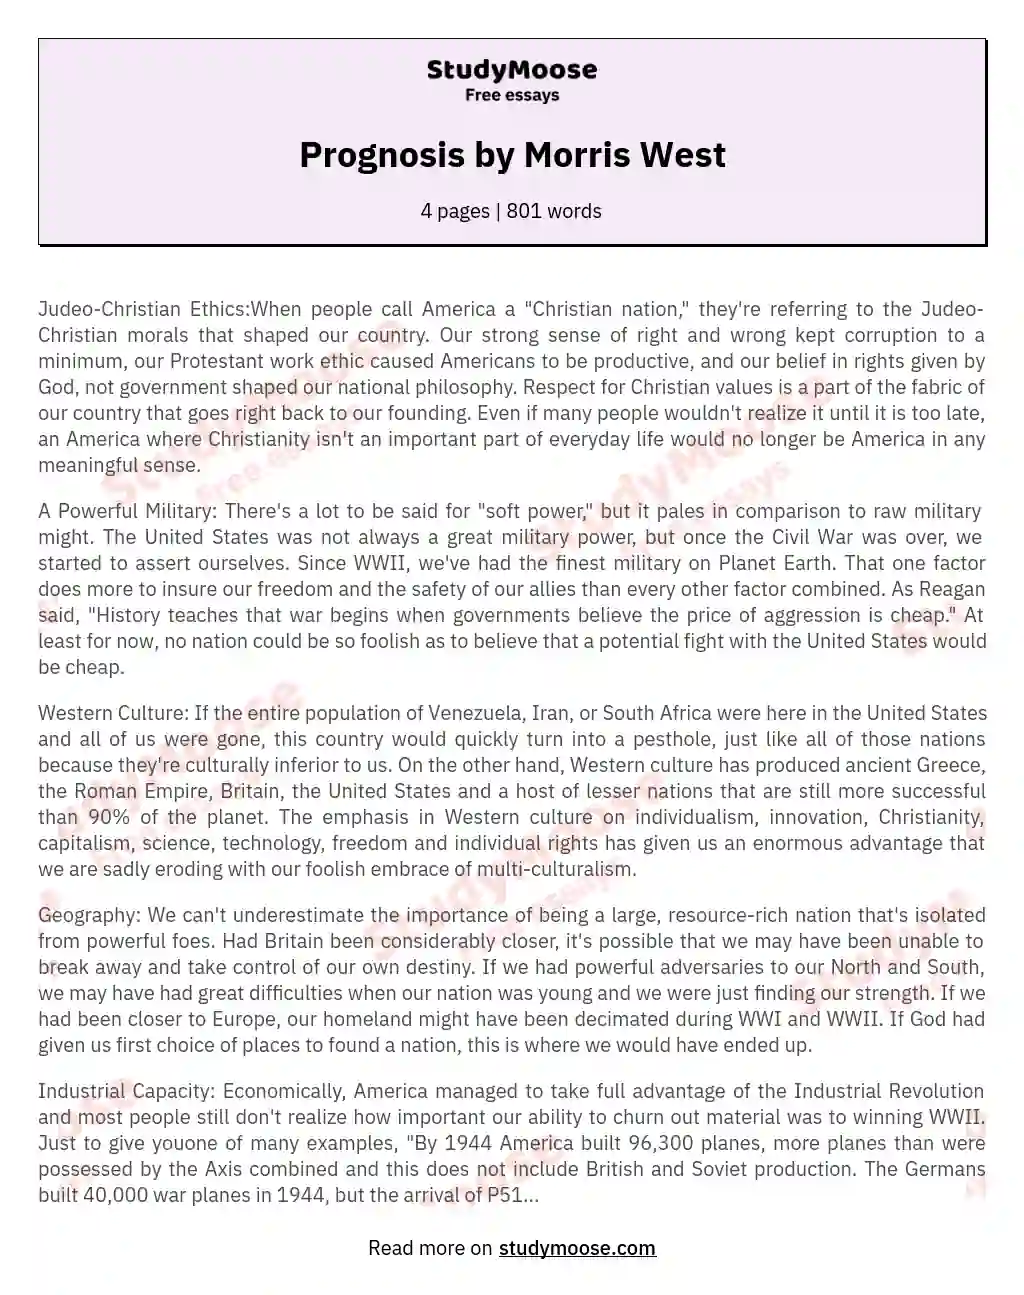 Prognosis by Morris West essay